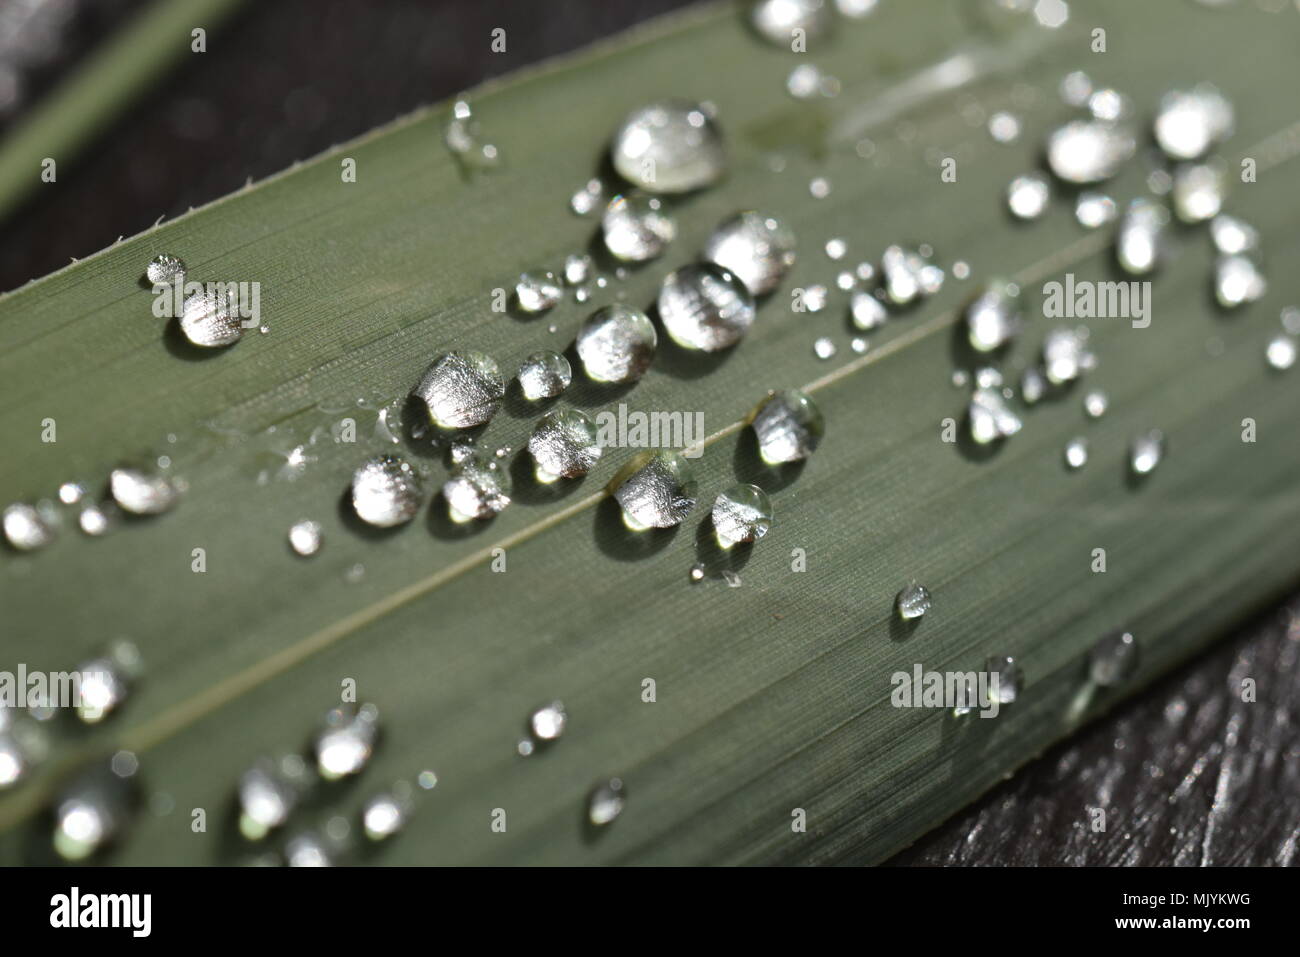 raindrops on leaf Stock Photo